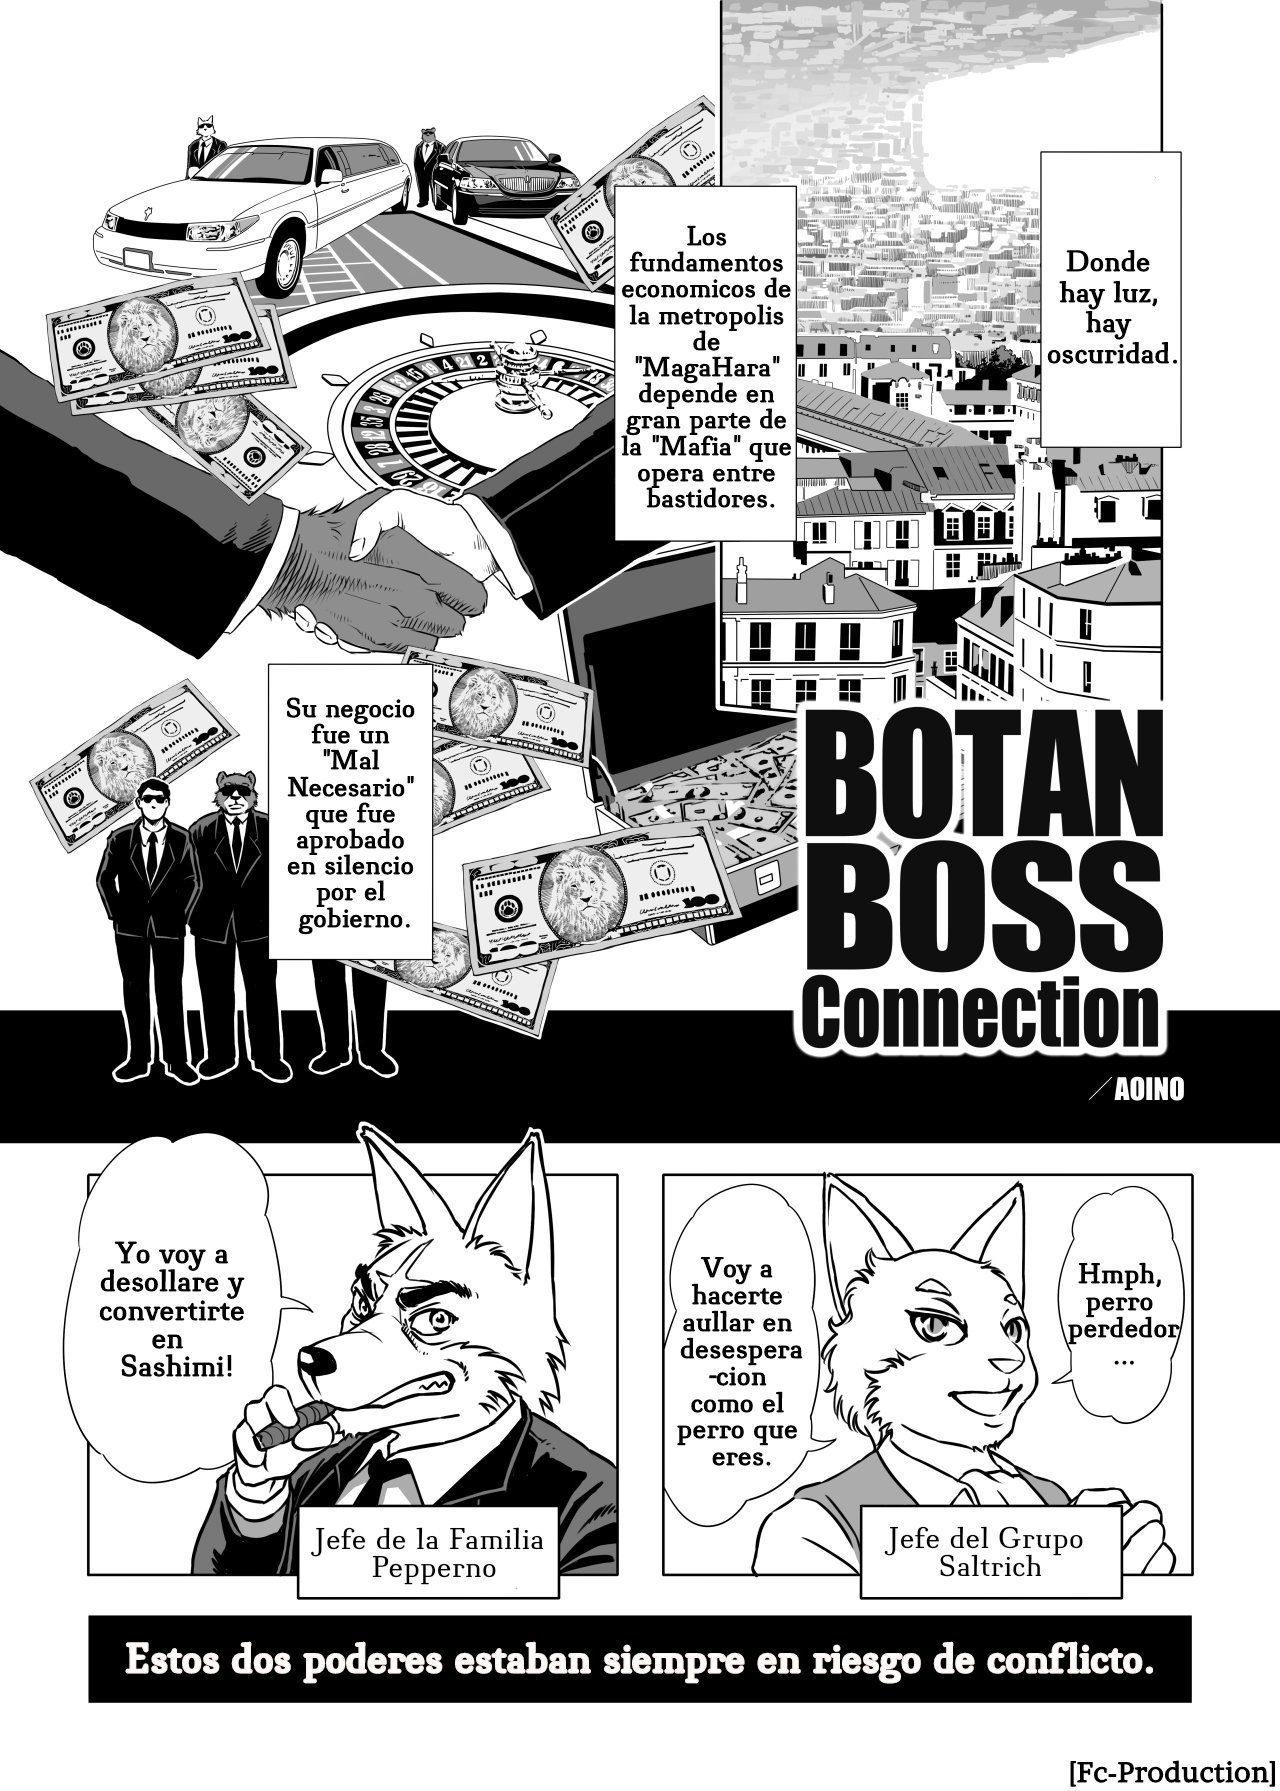 Botan Boss Connection - 0